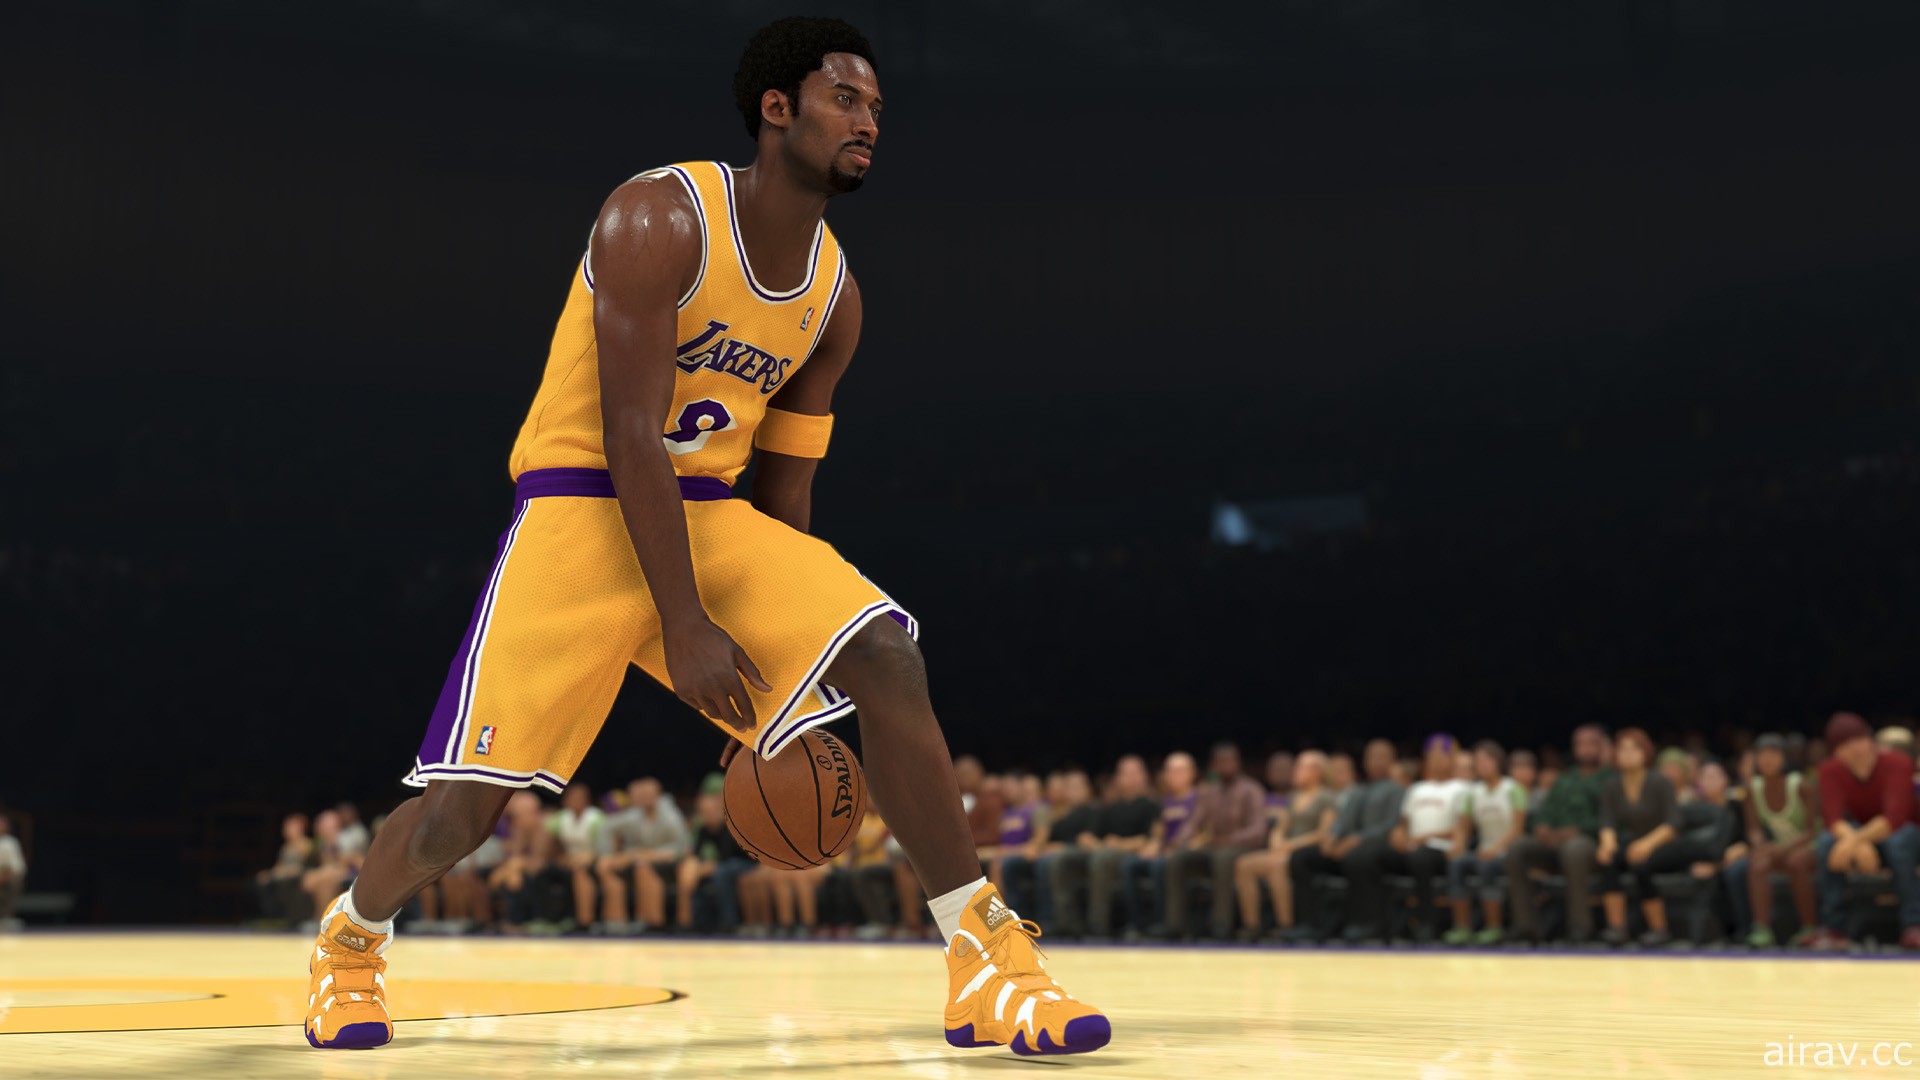 《NBA 2K21》现世代版体验版 8 月 24 日释出 官方部落格介绍全新游戏特色